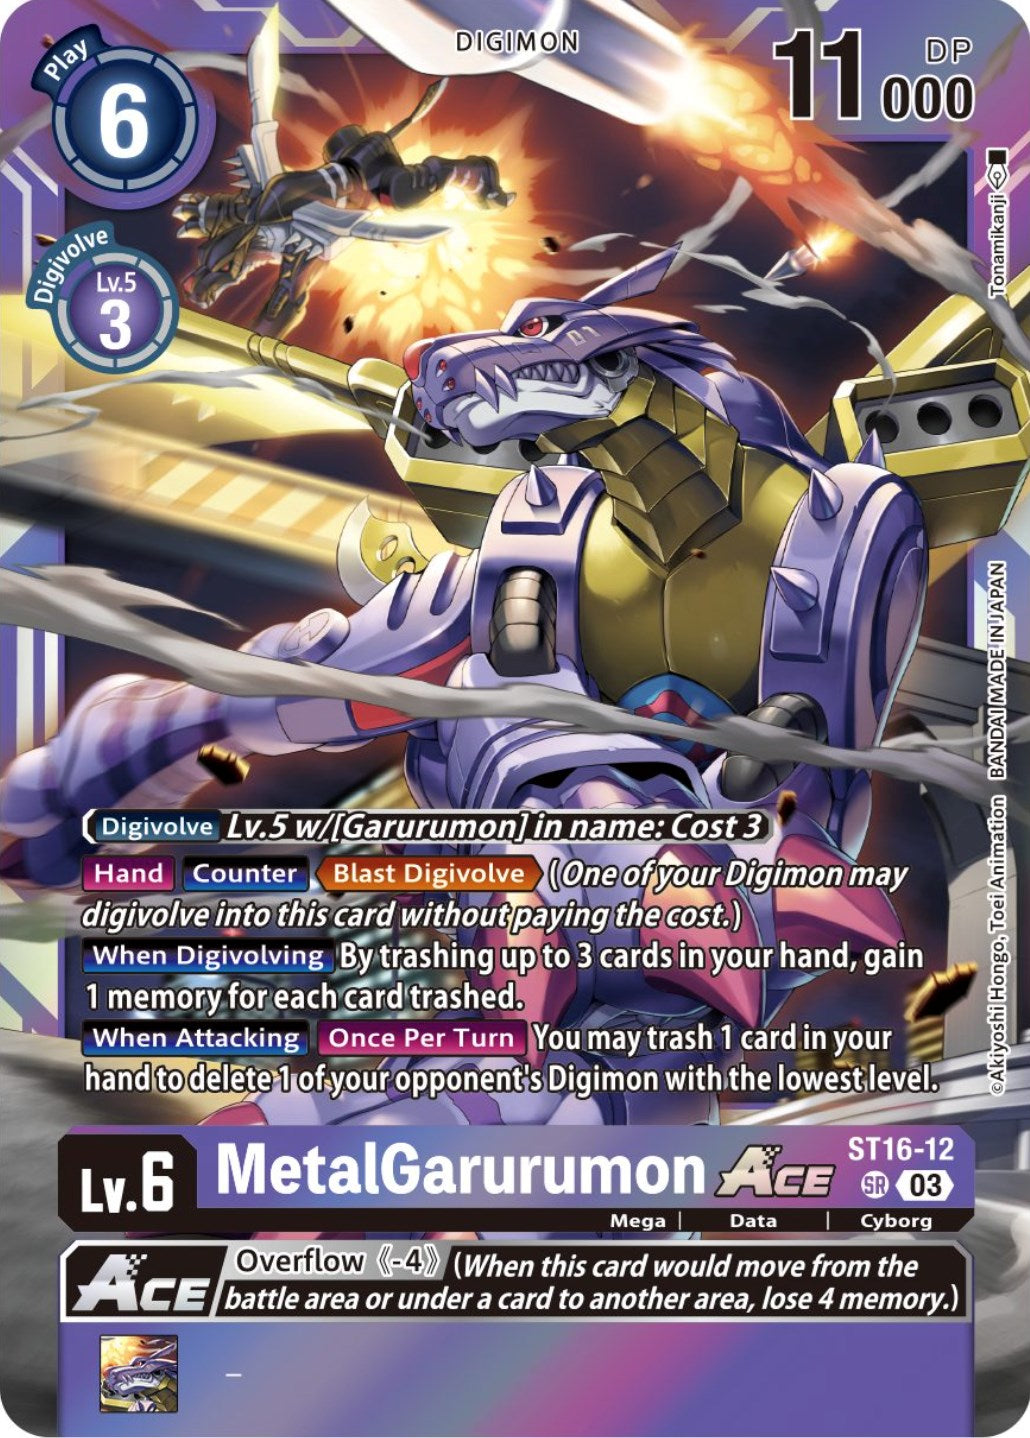 MetalGarurumon Ace [ST16-12] (Box Topper) [Versus Royal Knights Booster] | The Time Vault CA